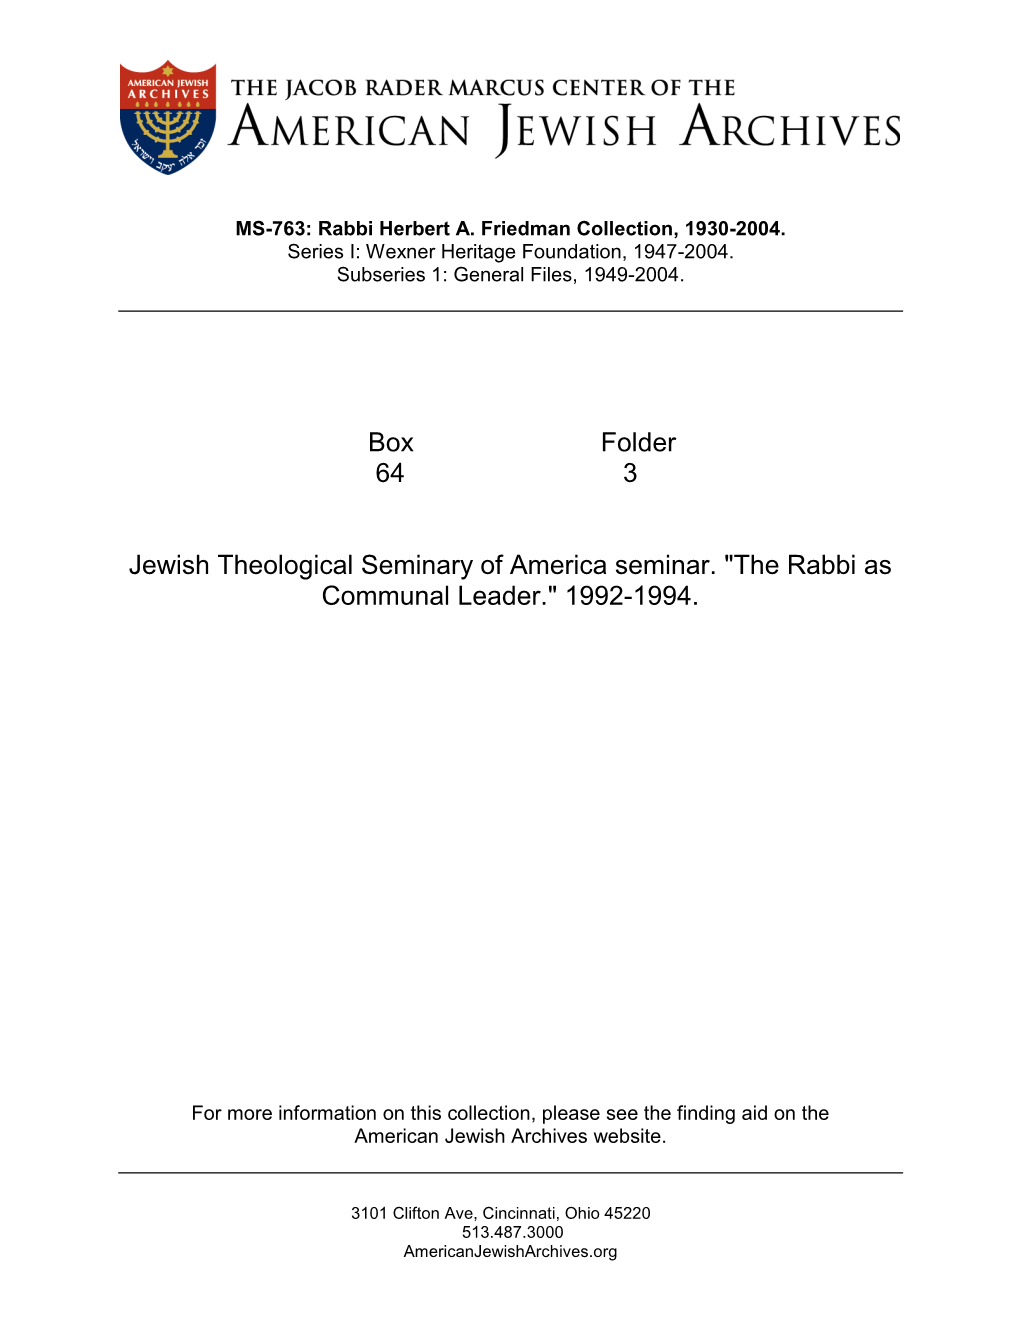 Box Folder 64 3 Jewish Theological